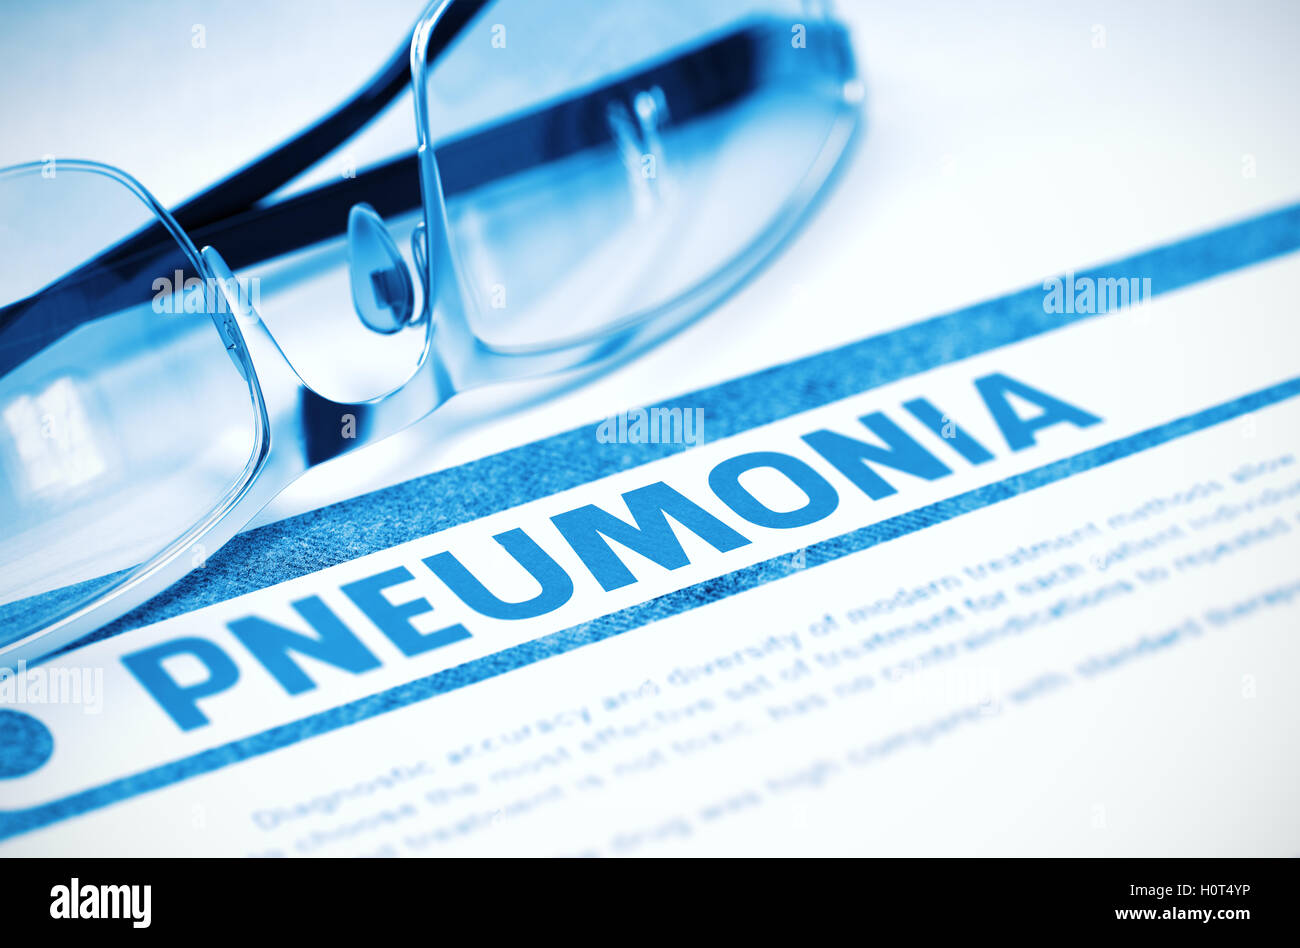 Diagnosis - Pneumonia. Medicine Concept. 3D Illustration. Stock Photo